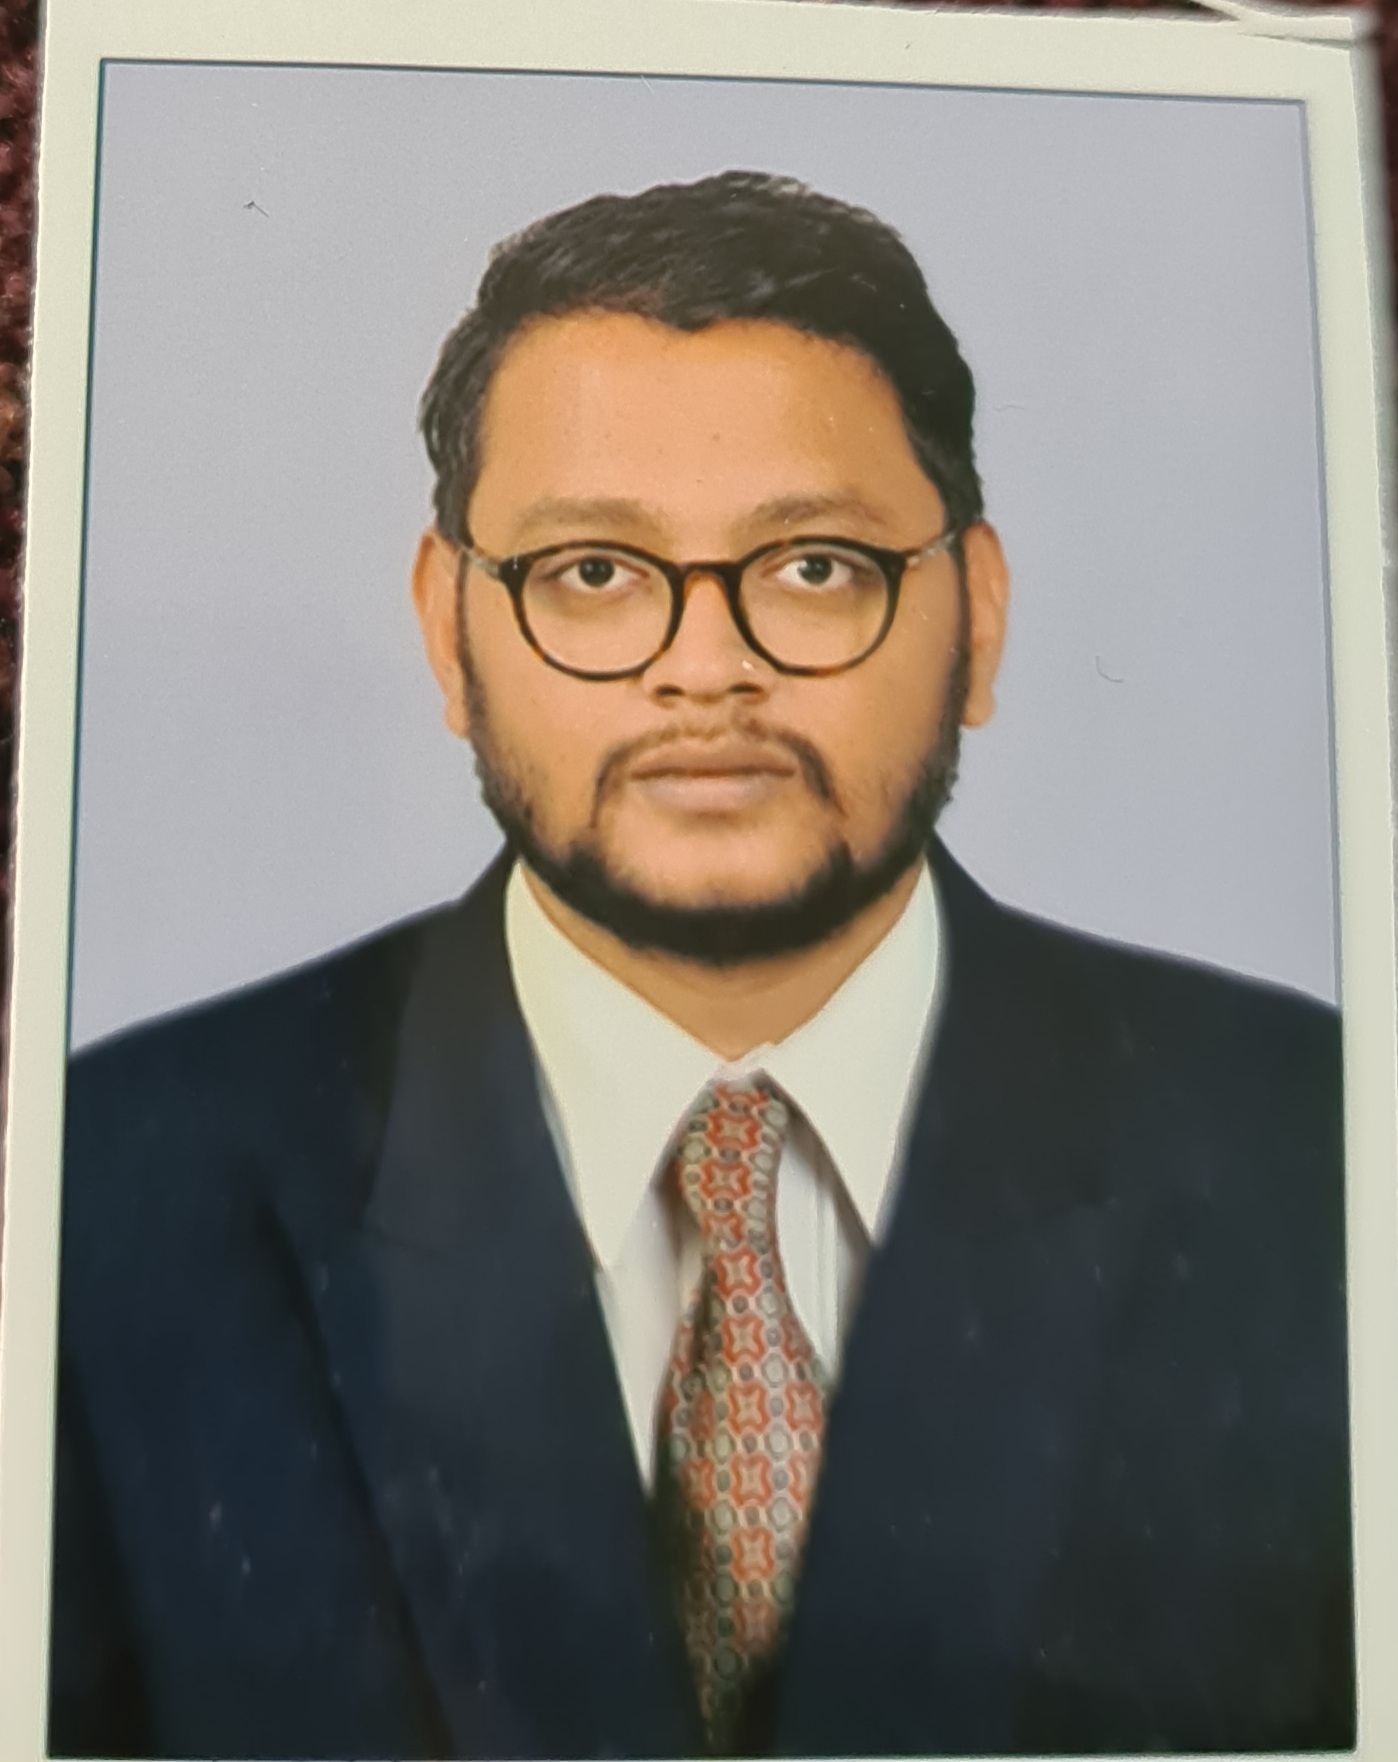 Dr Mineshkumar Patel